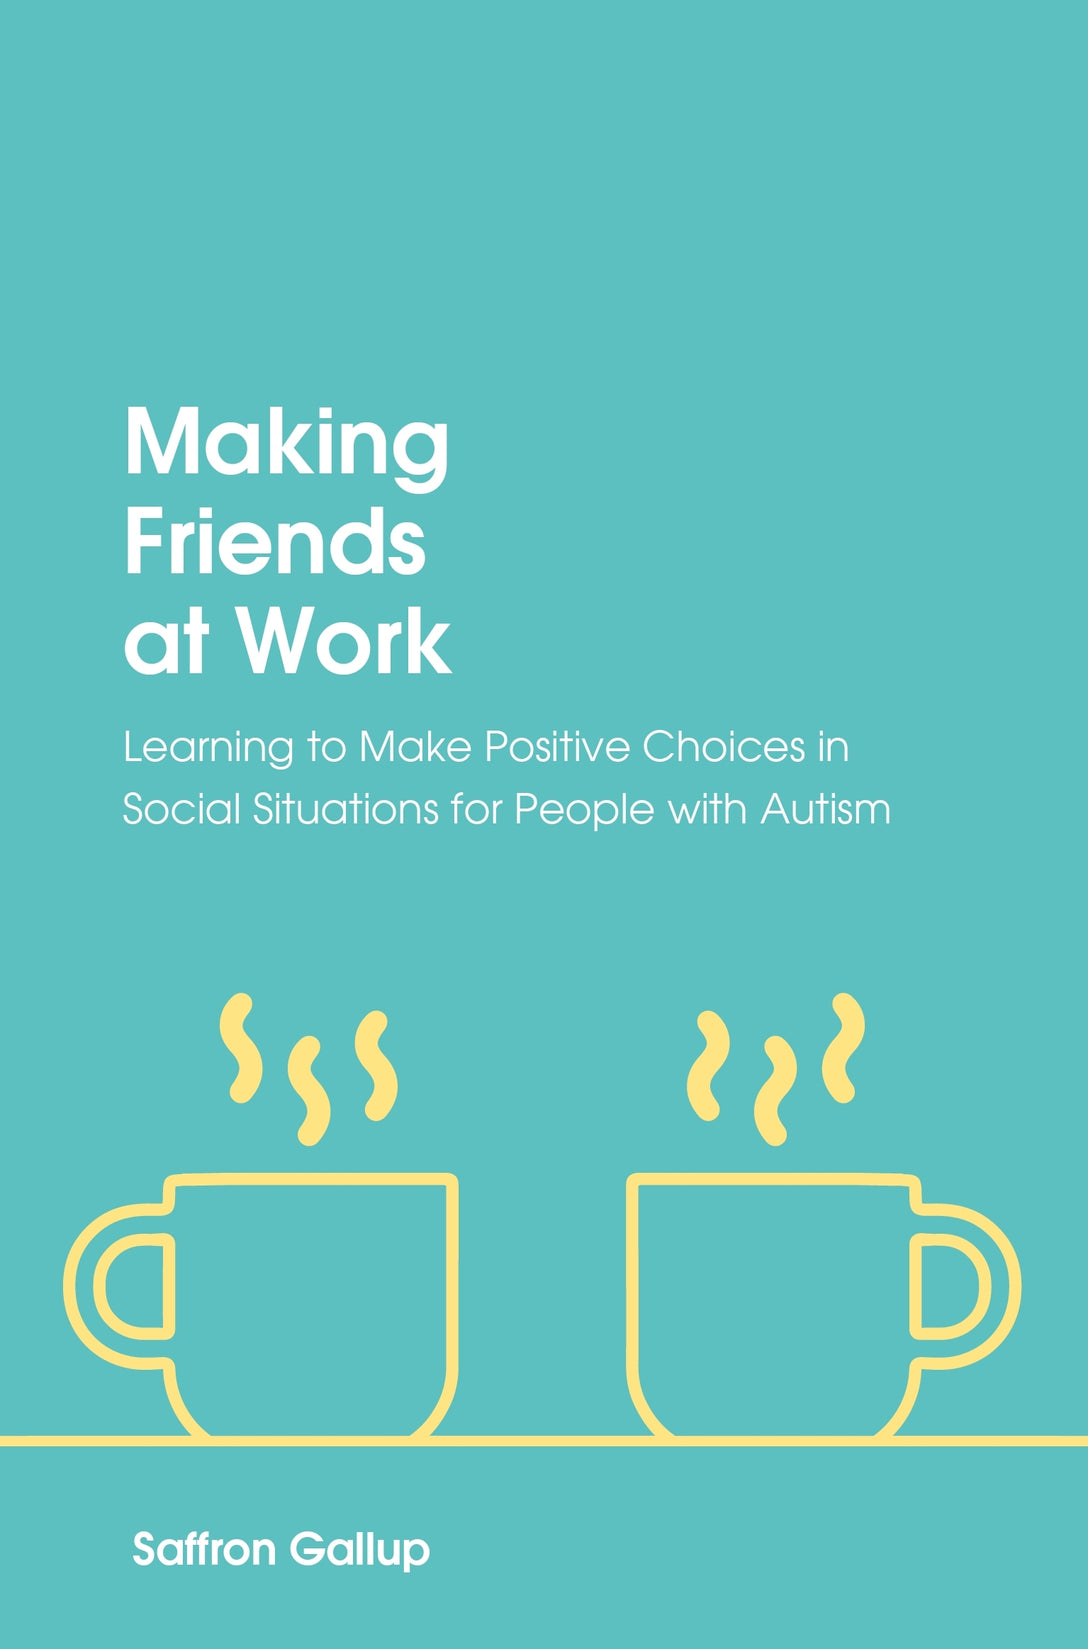 Making Friends at Work by Saffron Gallup